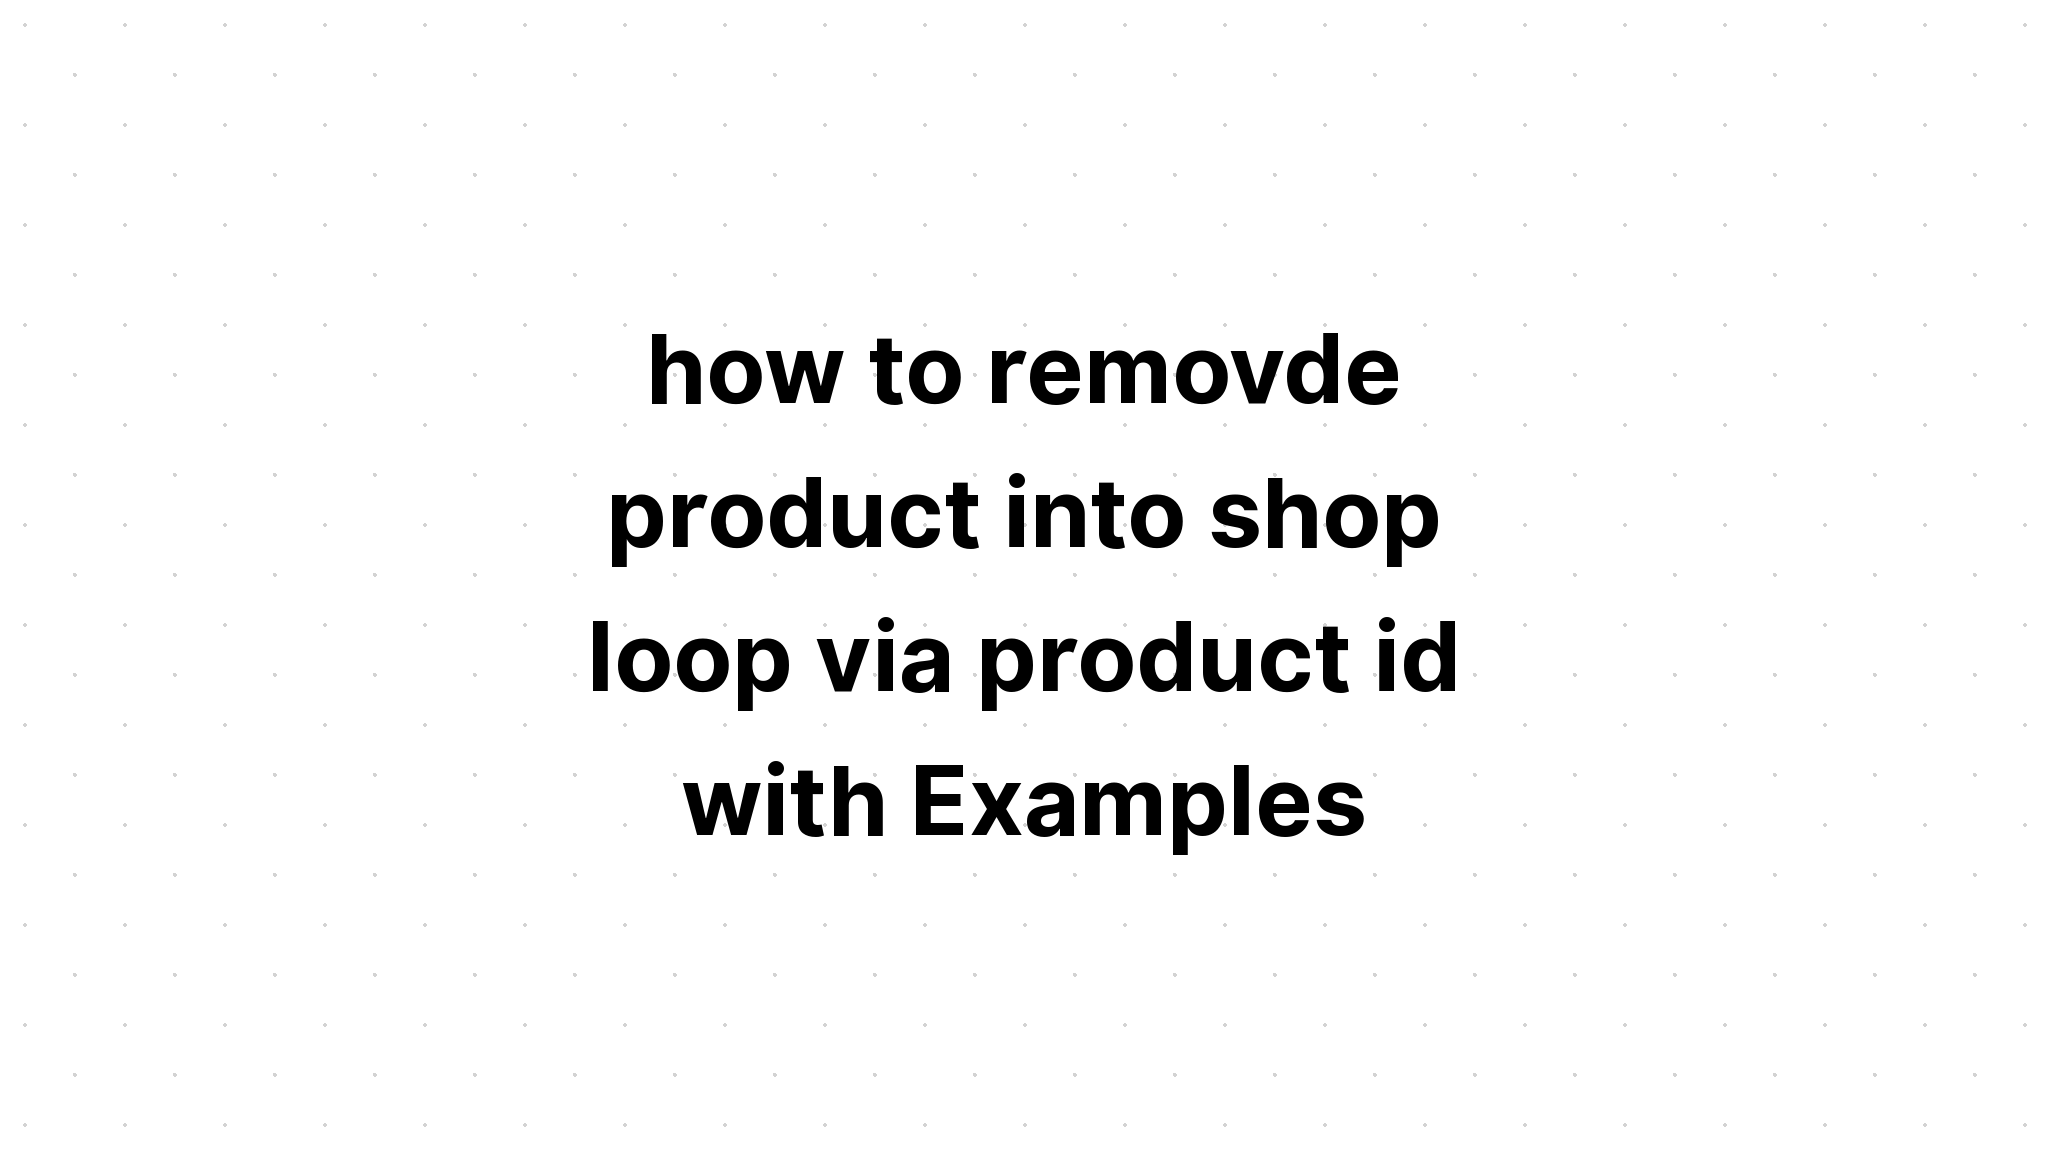 cara menghapus produk ke loop toko melalui id produk dengan Contoh